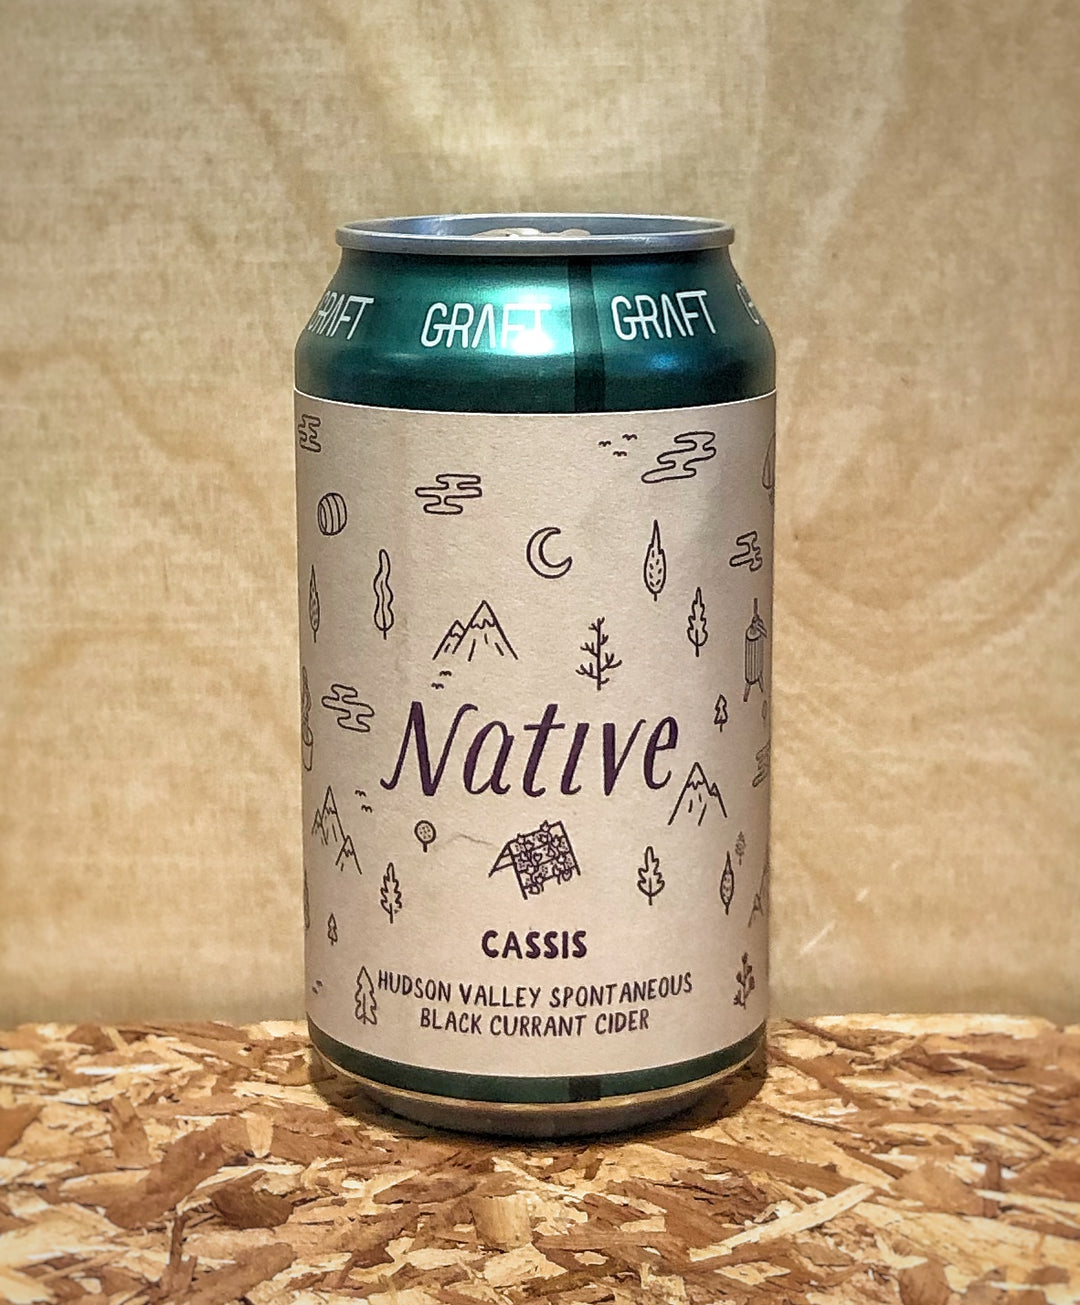 Graft Cider 'Native Cassis' Black Currant (Newburgh, NY)